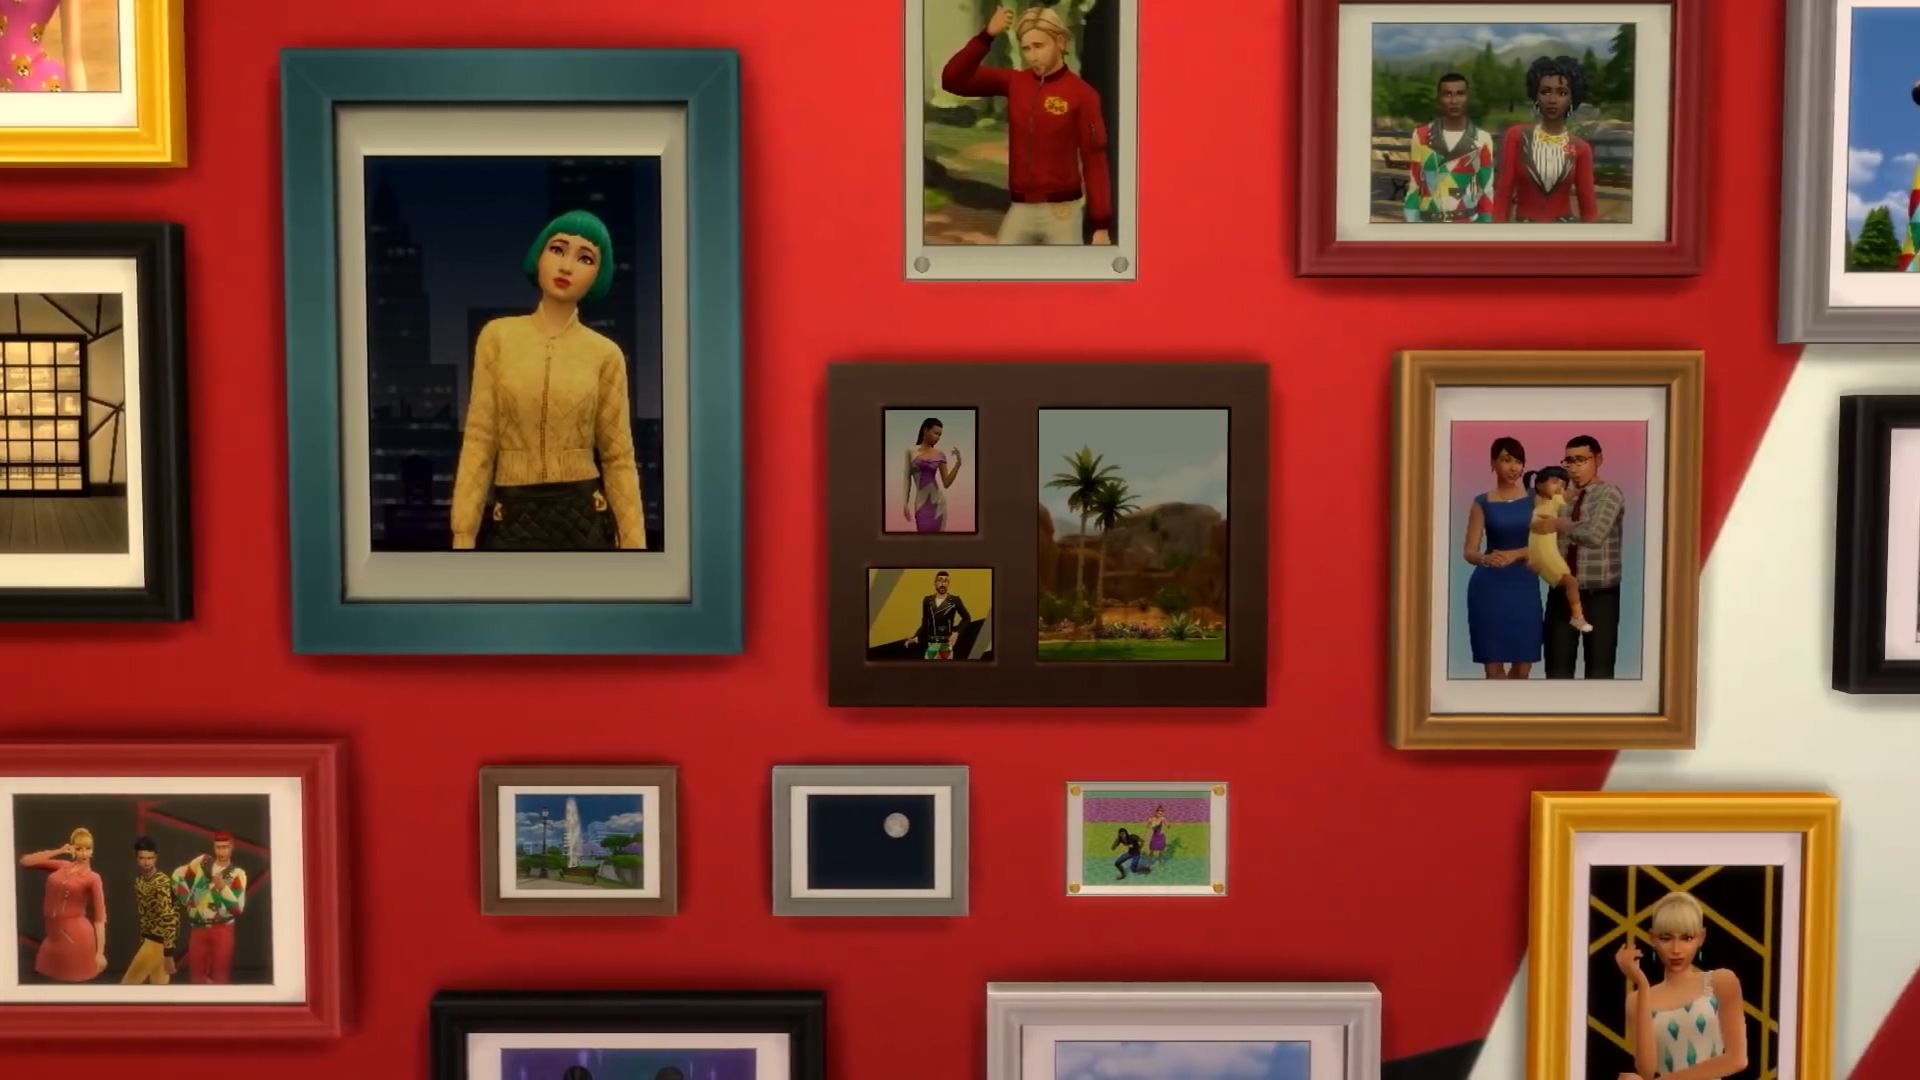 Moschino taps 'The Sims' for Coachella's big fashion moment